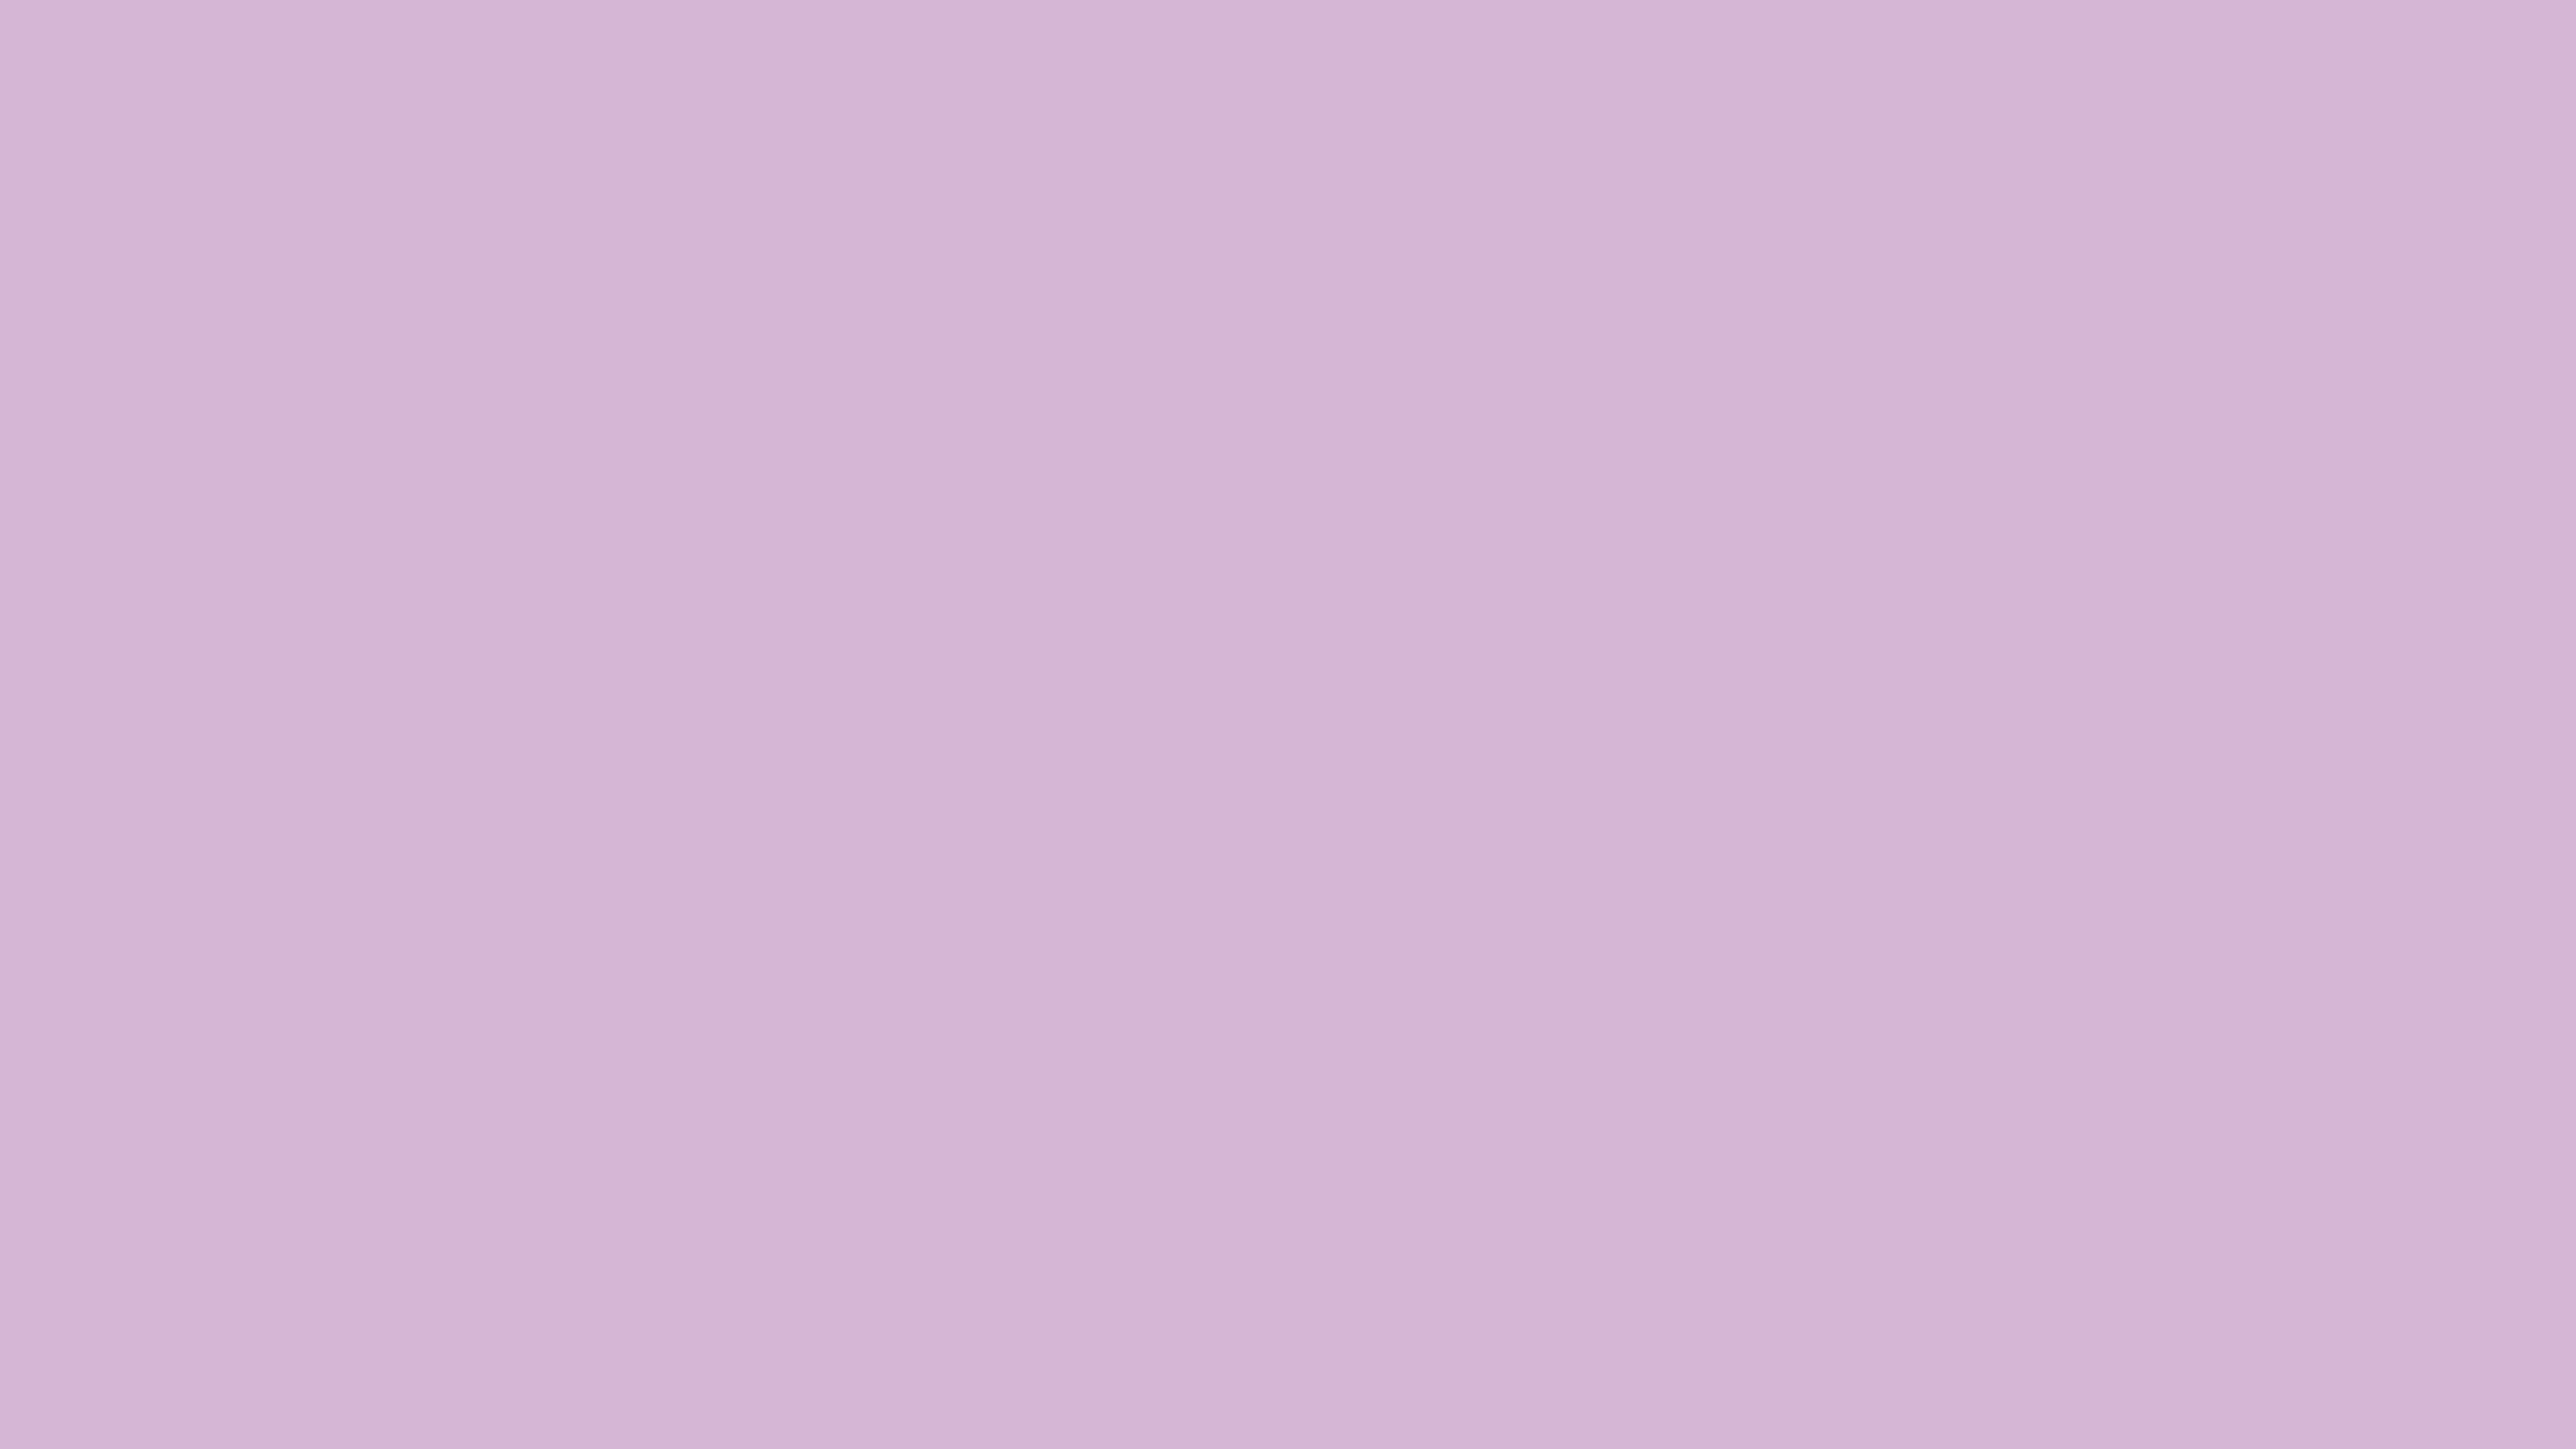 Lilac Haze Solid Color Background Image | Free Image Generator